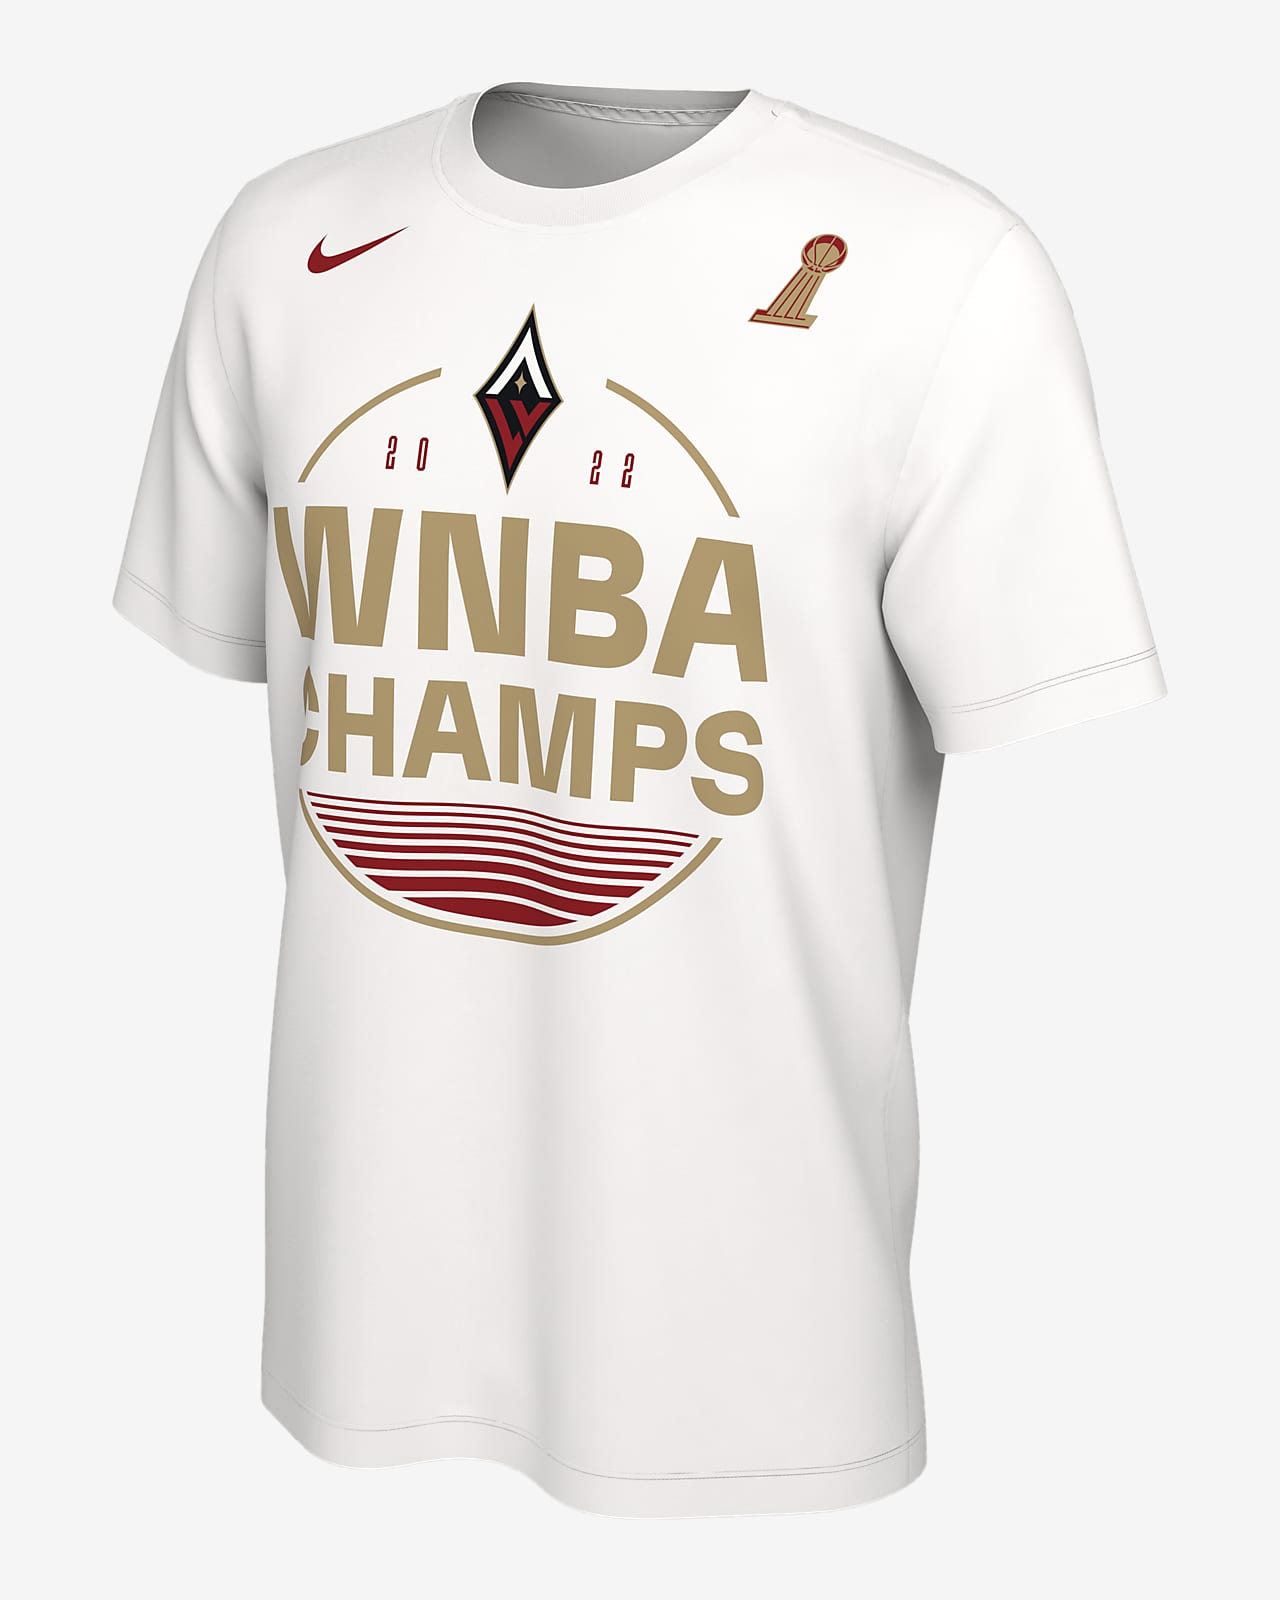 Las Vegas Aces Men's Nike WNBA T-Shirt.